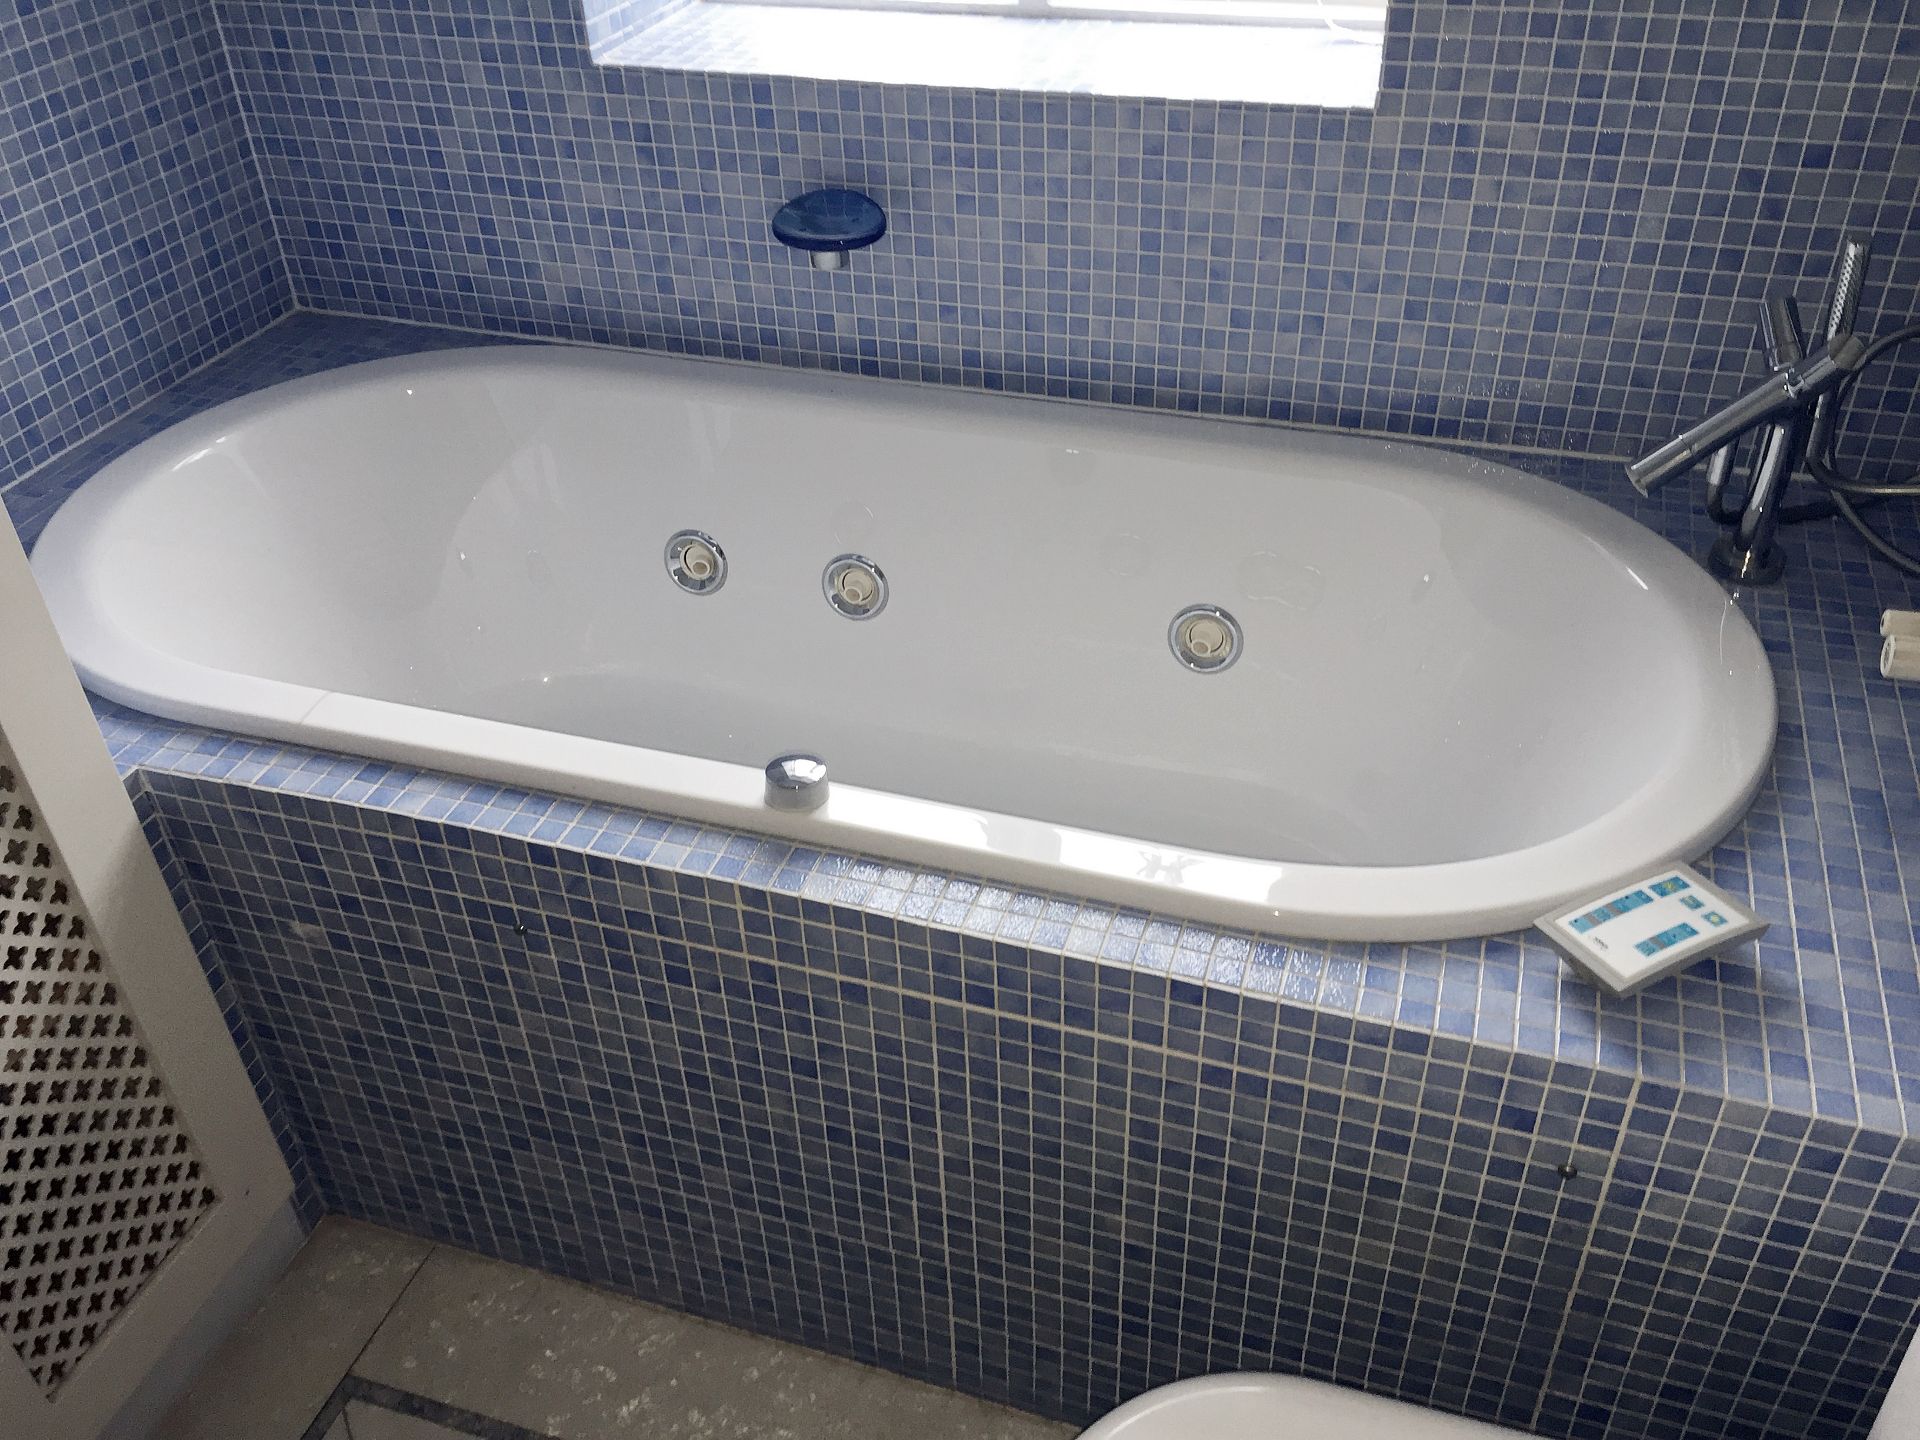 1 x Stark For Hoesch DESIGNER Jacuzzi Bath With Control - Dimensions: 175 x 80 x Depth 65cm -